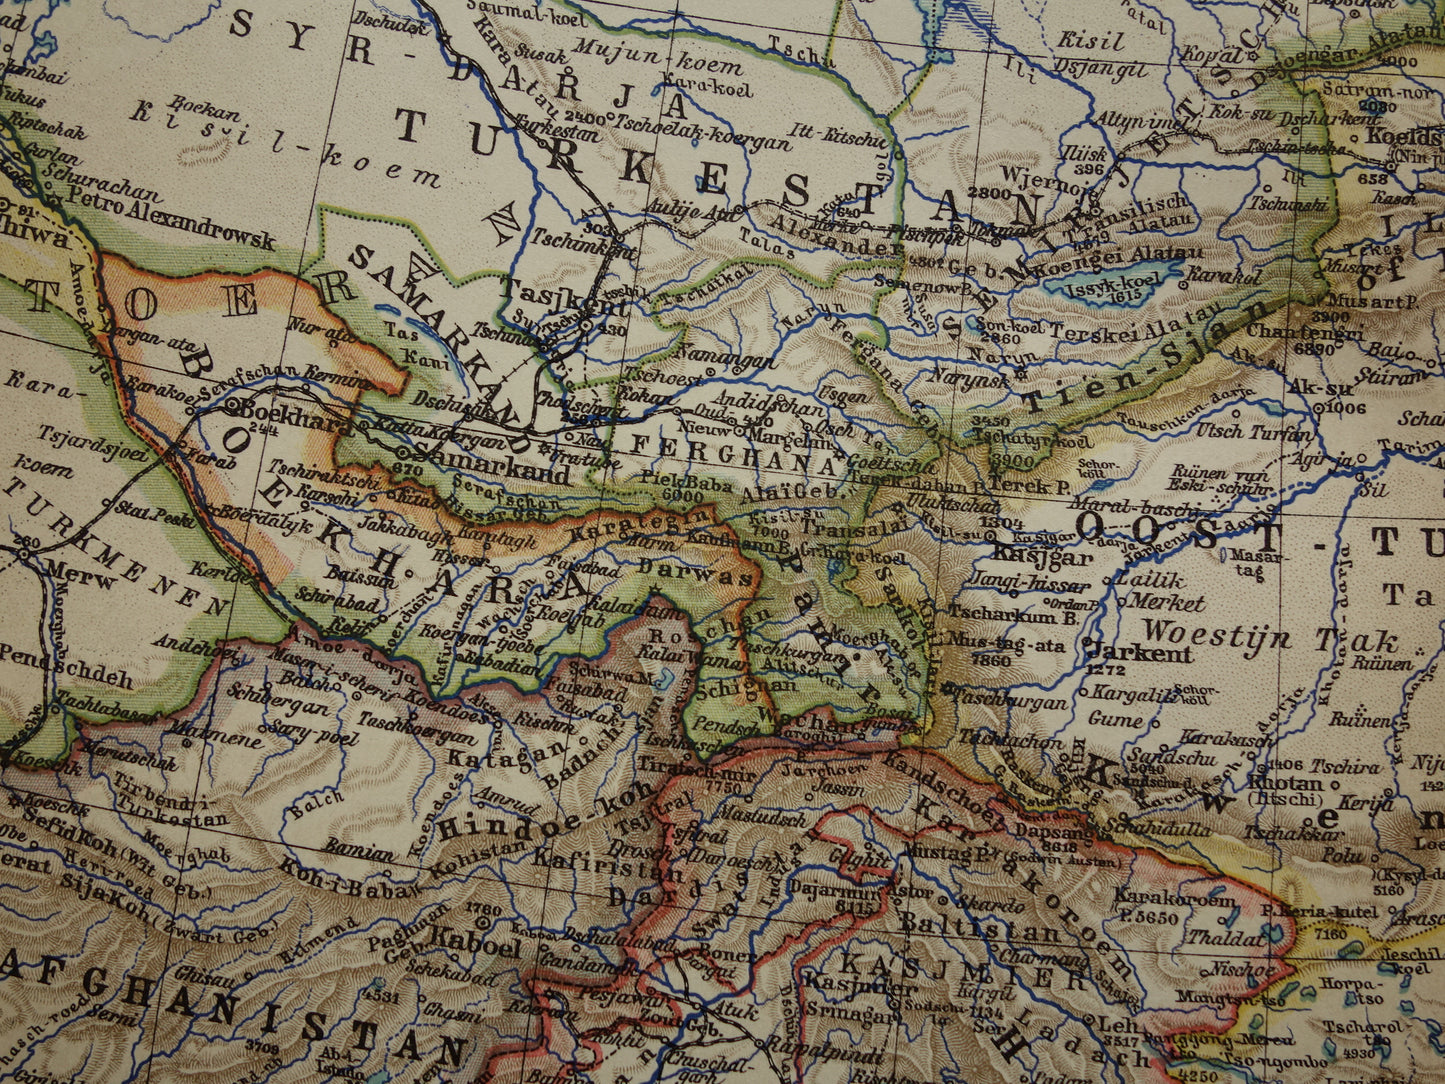 CENTRAAL-AZIË oude landkaart van Tibet Kashmir Turkestan Himalaya oude Nederlandse kaart Oezbekistan Kirgizië Tadzjikistan